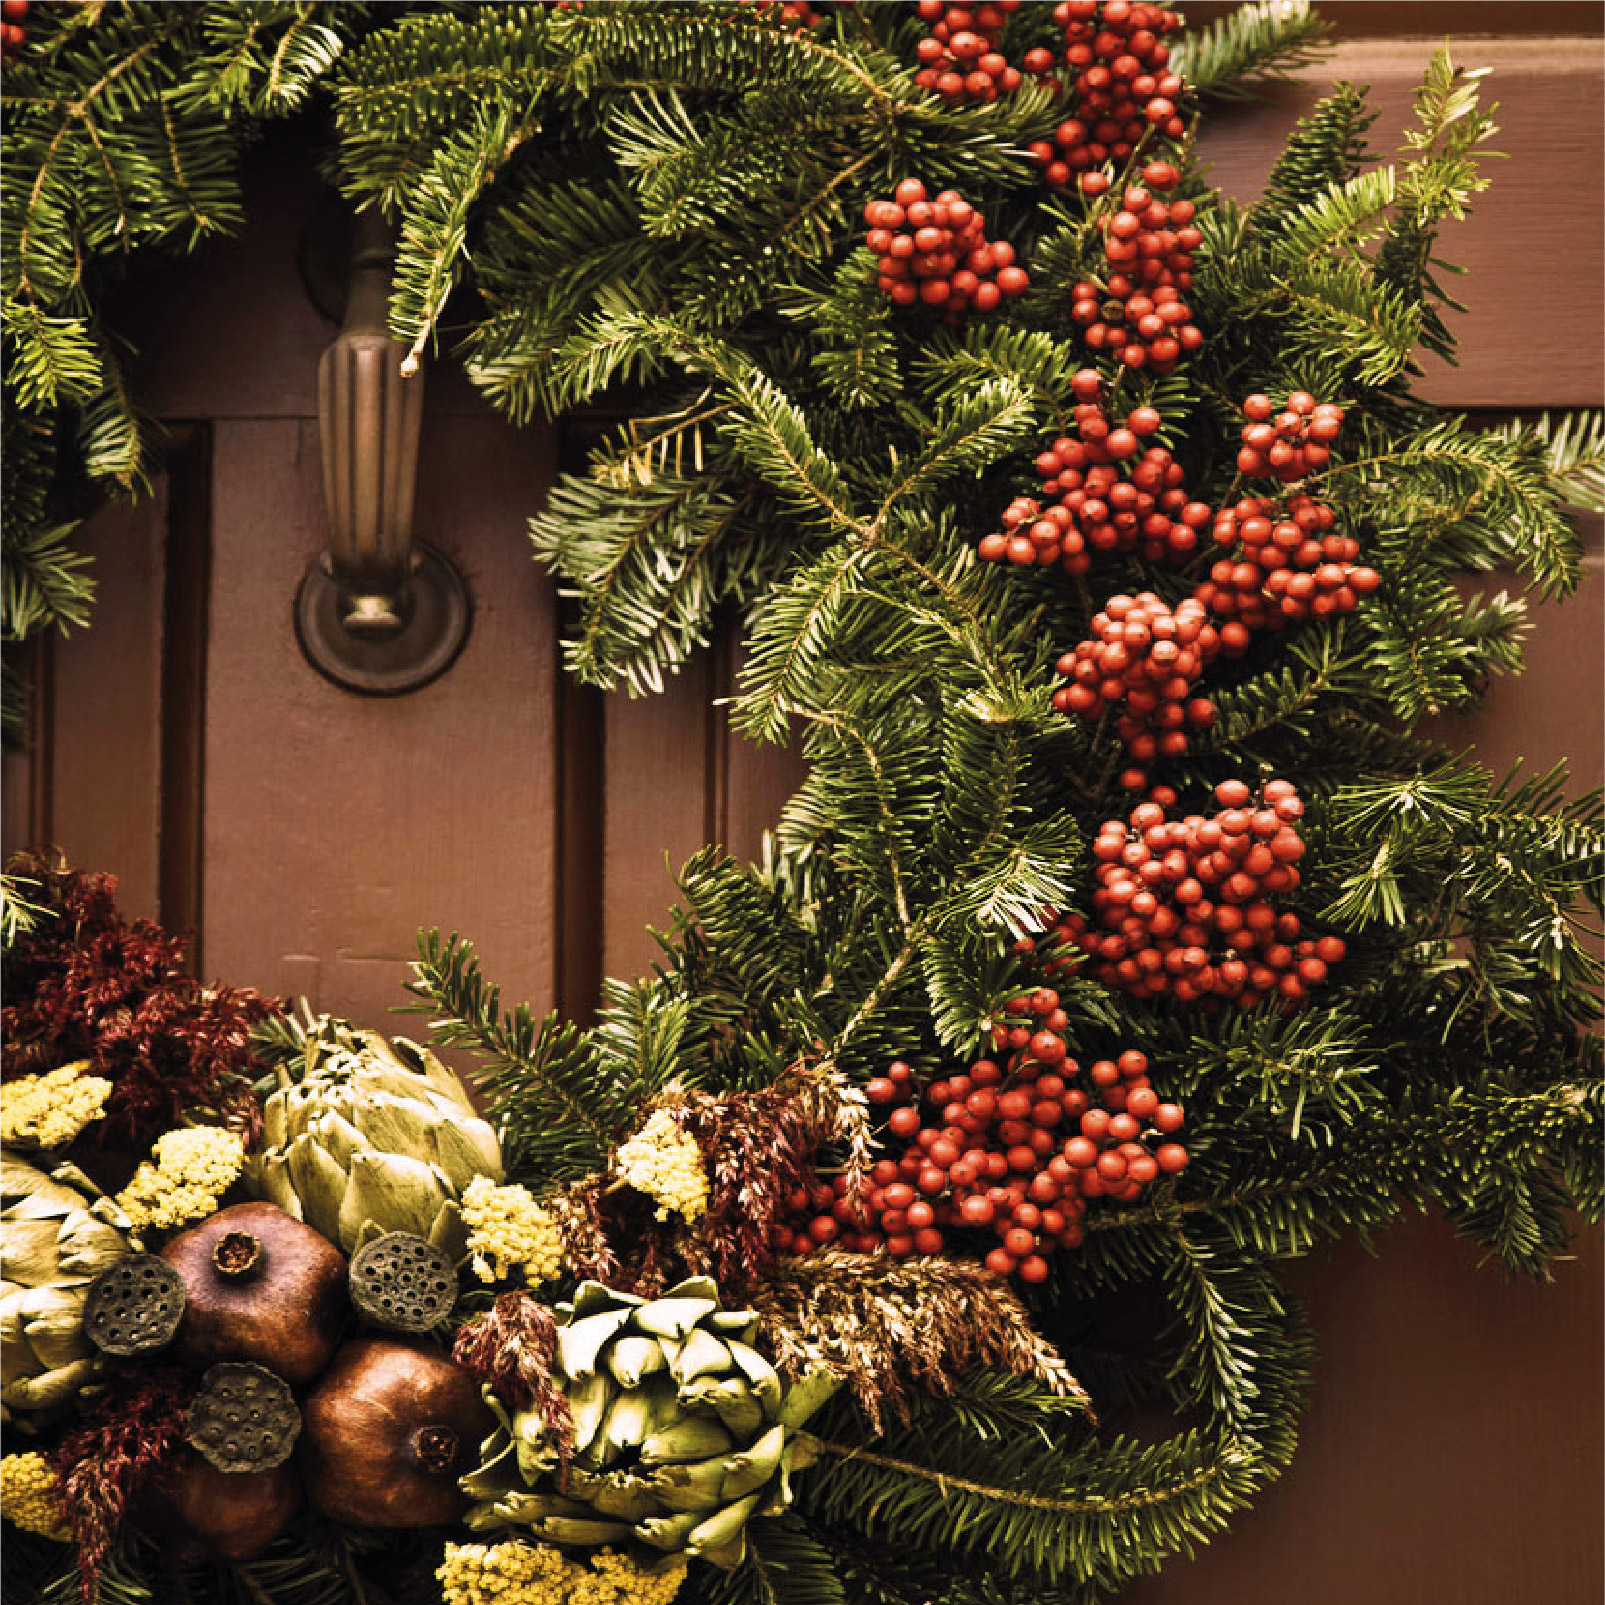 Christmas Wreath on the Door